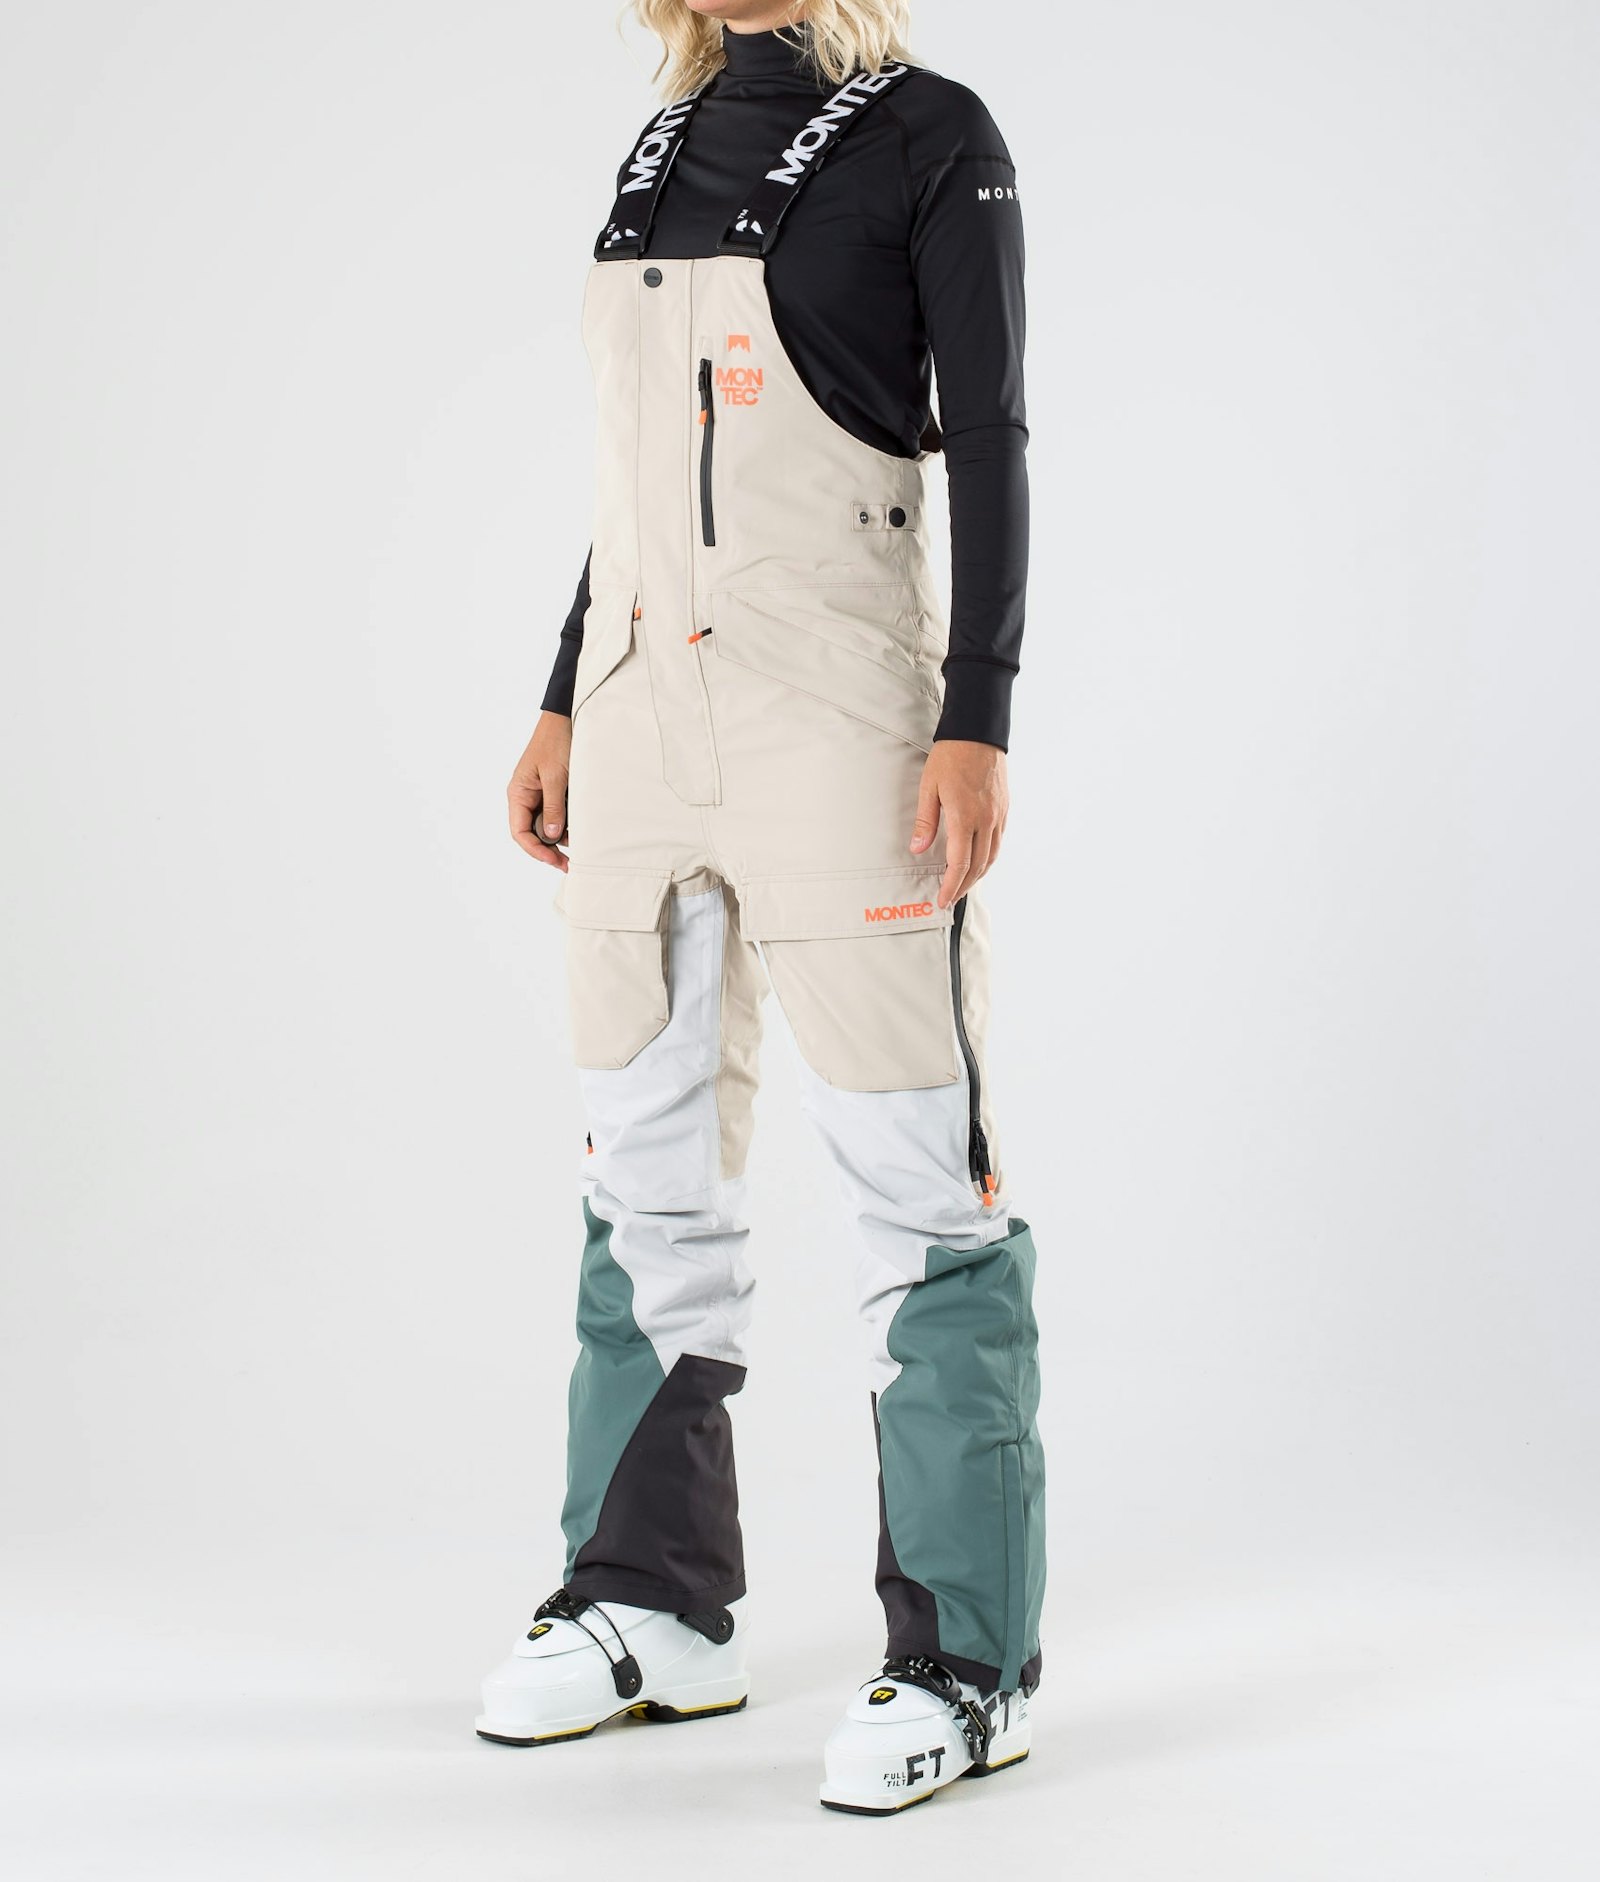 Fawk W 2019 Ski Pants Women Desert/Light Grey/Atlantic